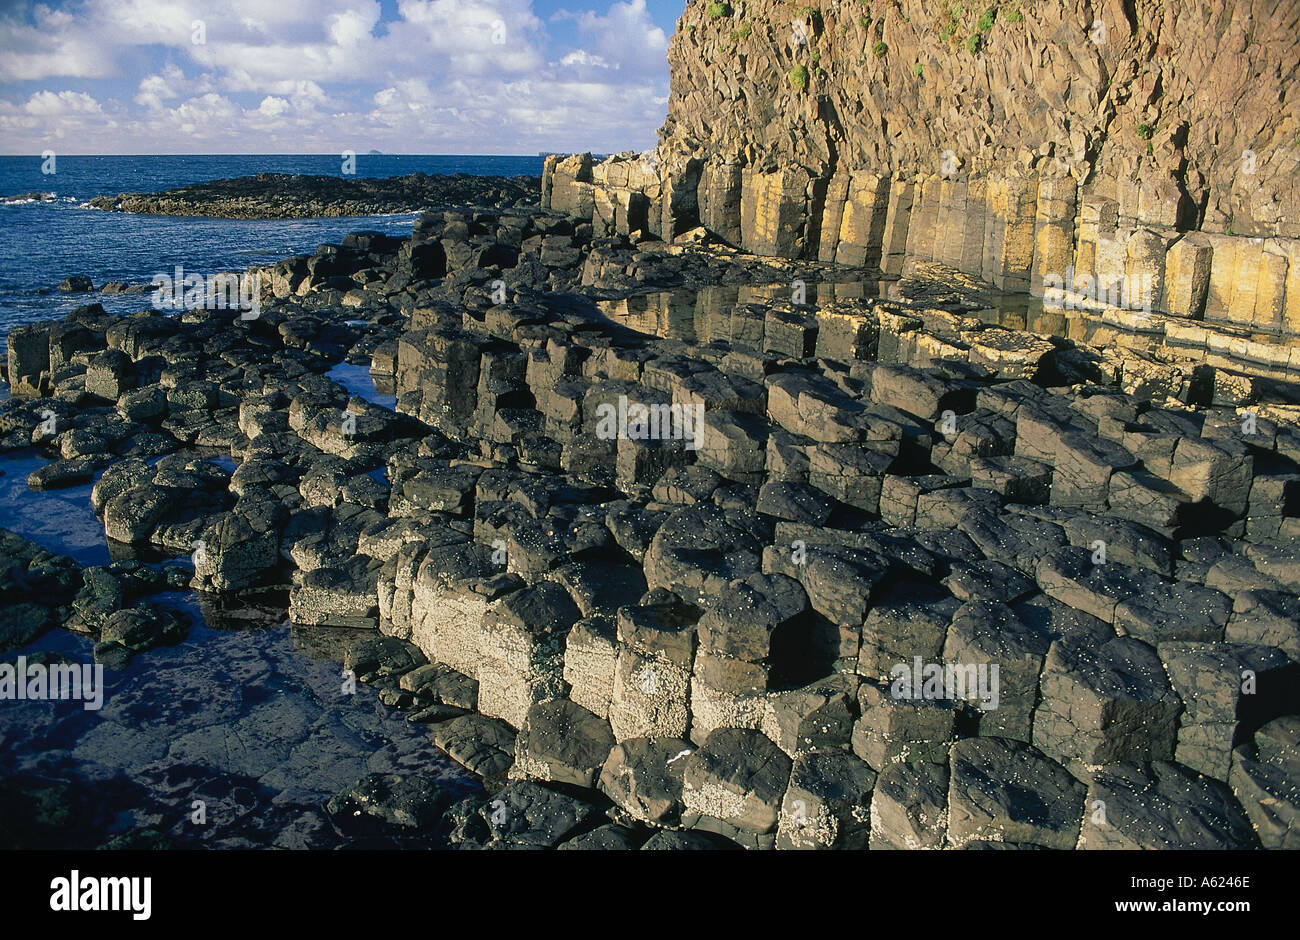 SCOTLAND Isle Of Mull Basalt rock formations on the coastline. Stock Photo